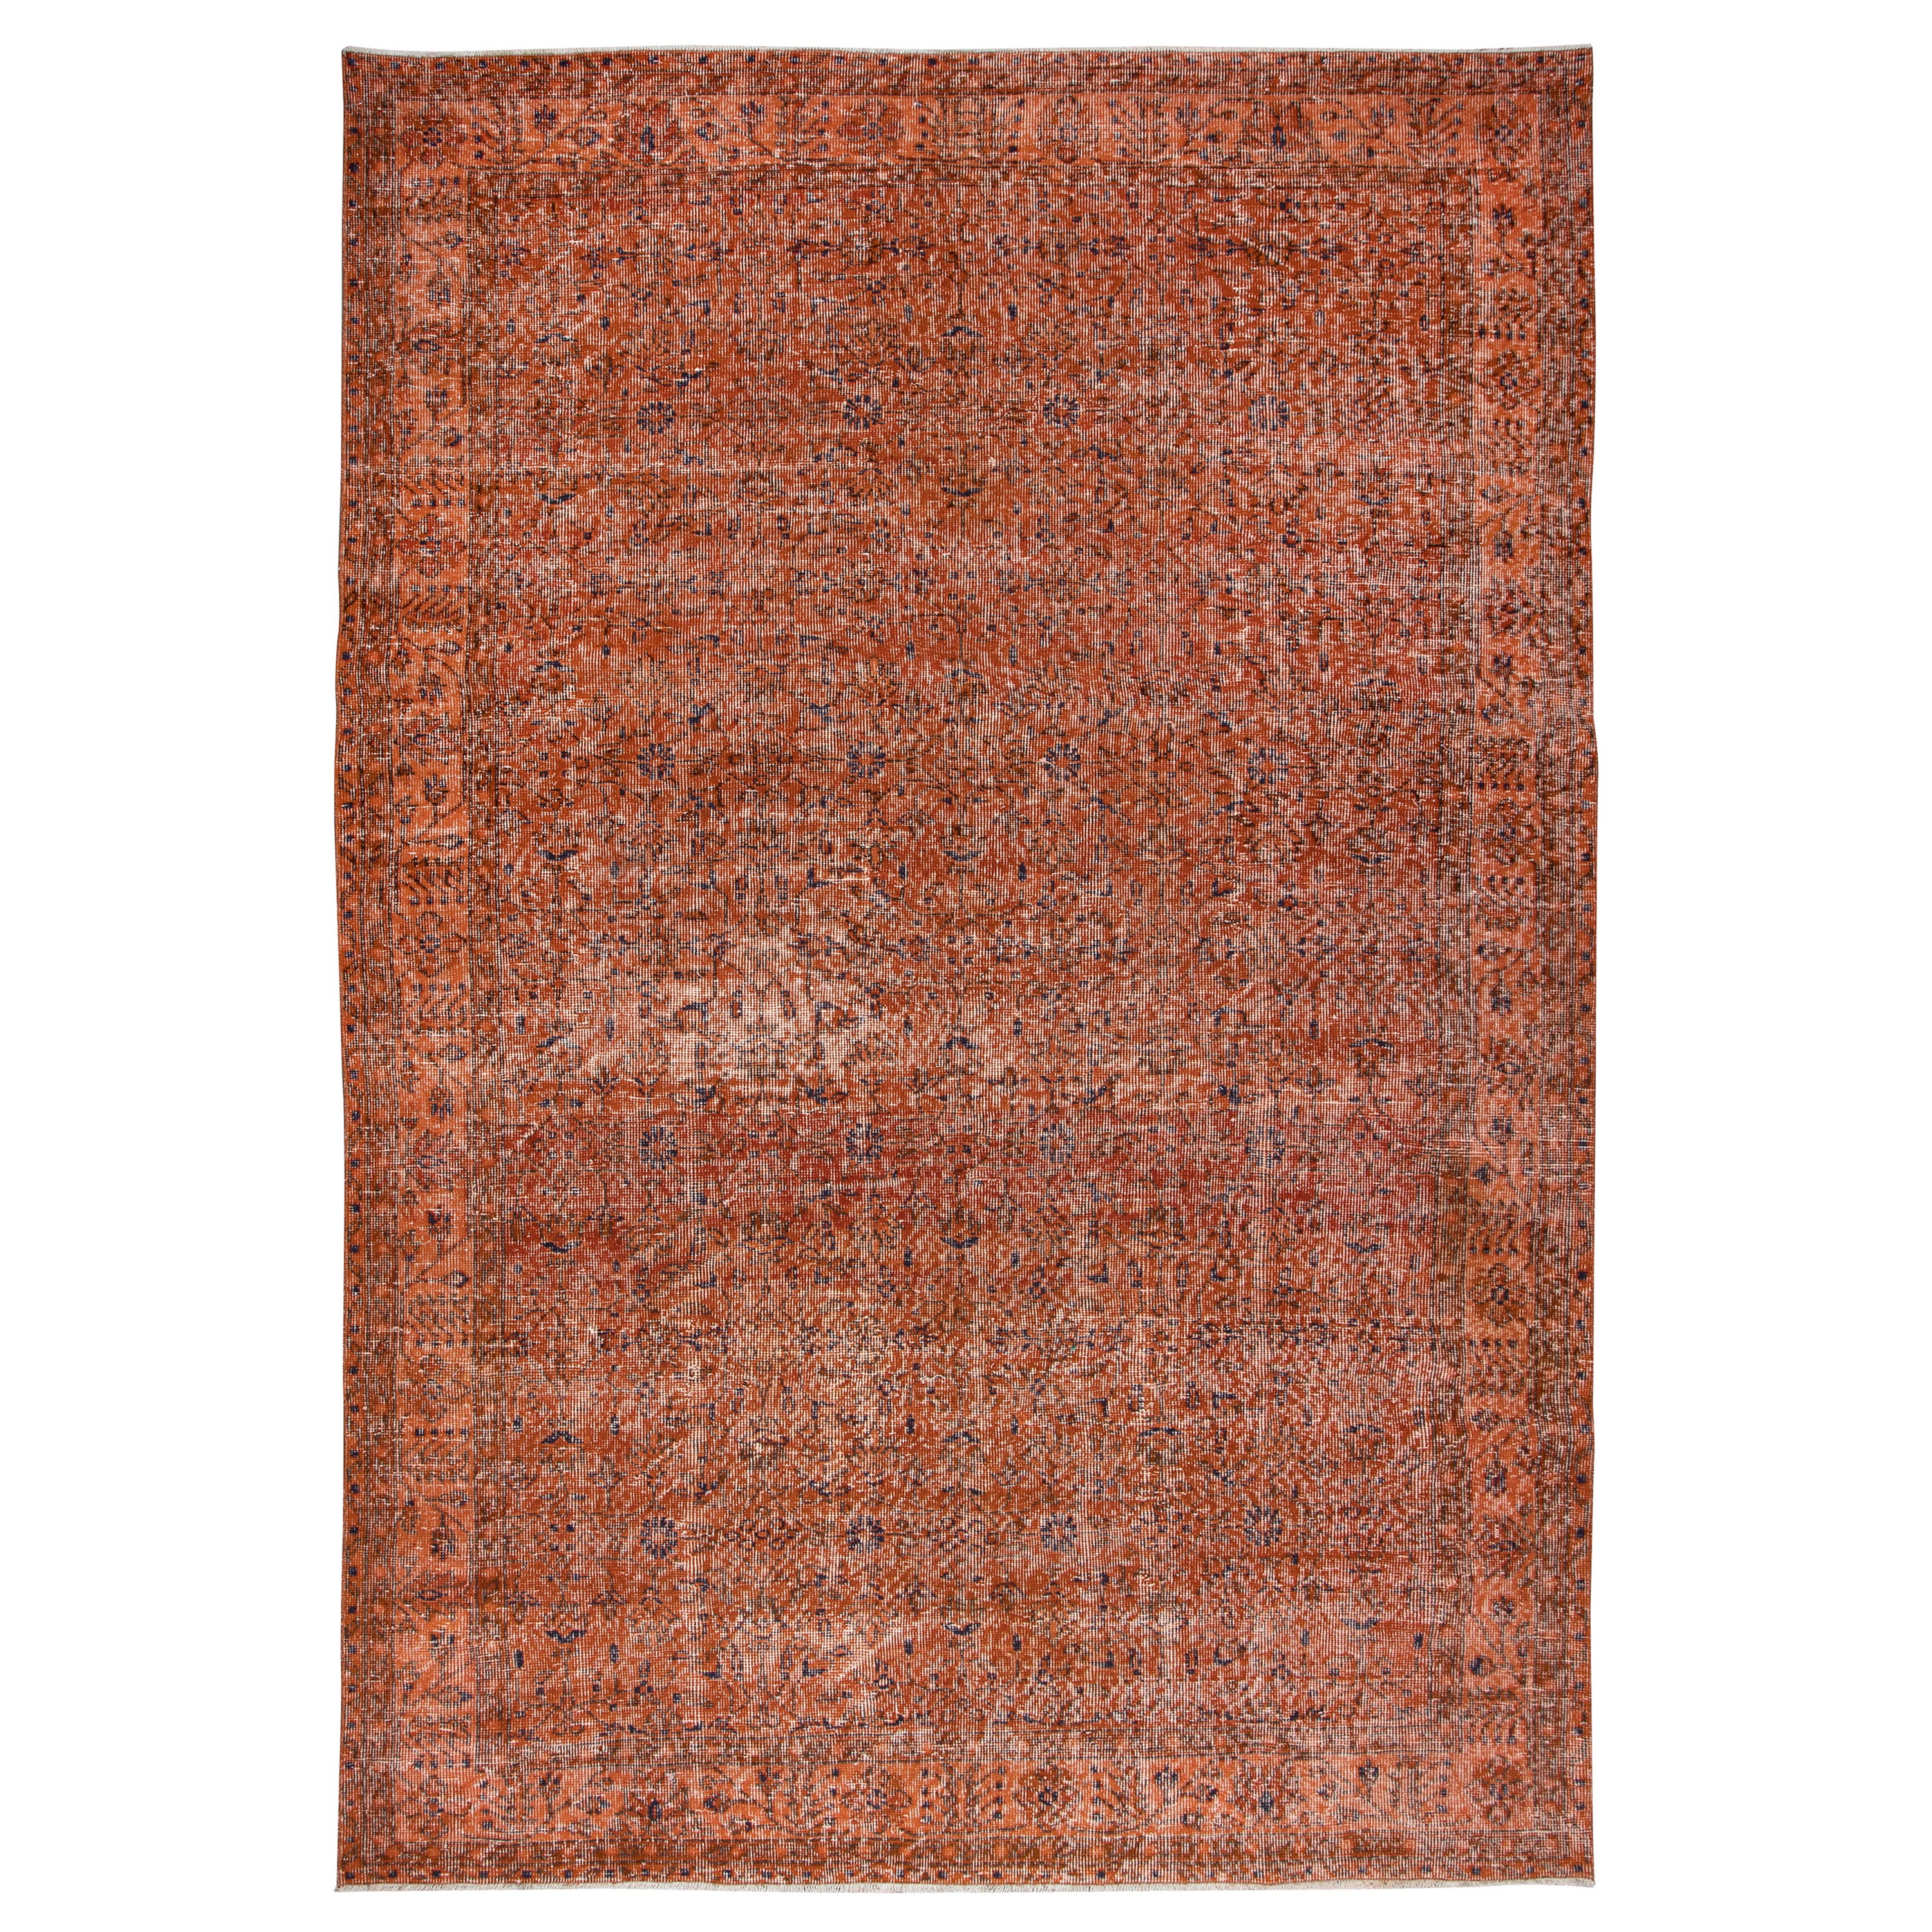 6.7x10 ft Handmade Turkish Orange Rug, Modern Floral Carpet, Bohemian Home Decor For Sale